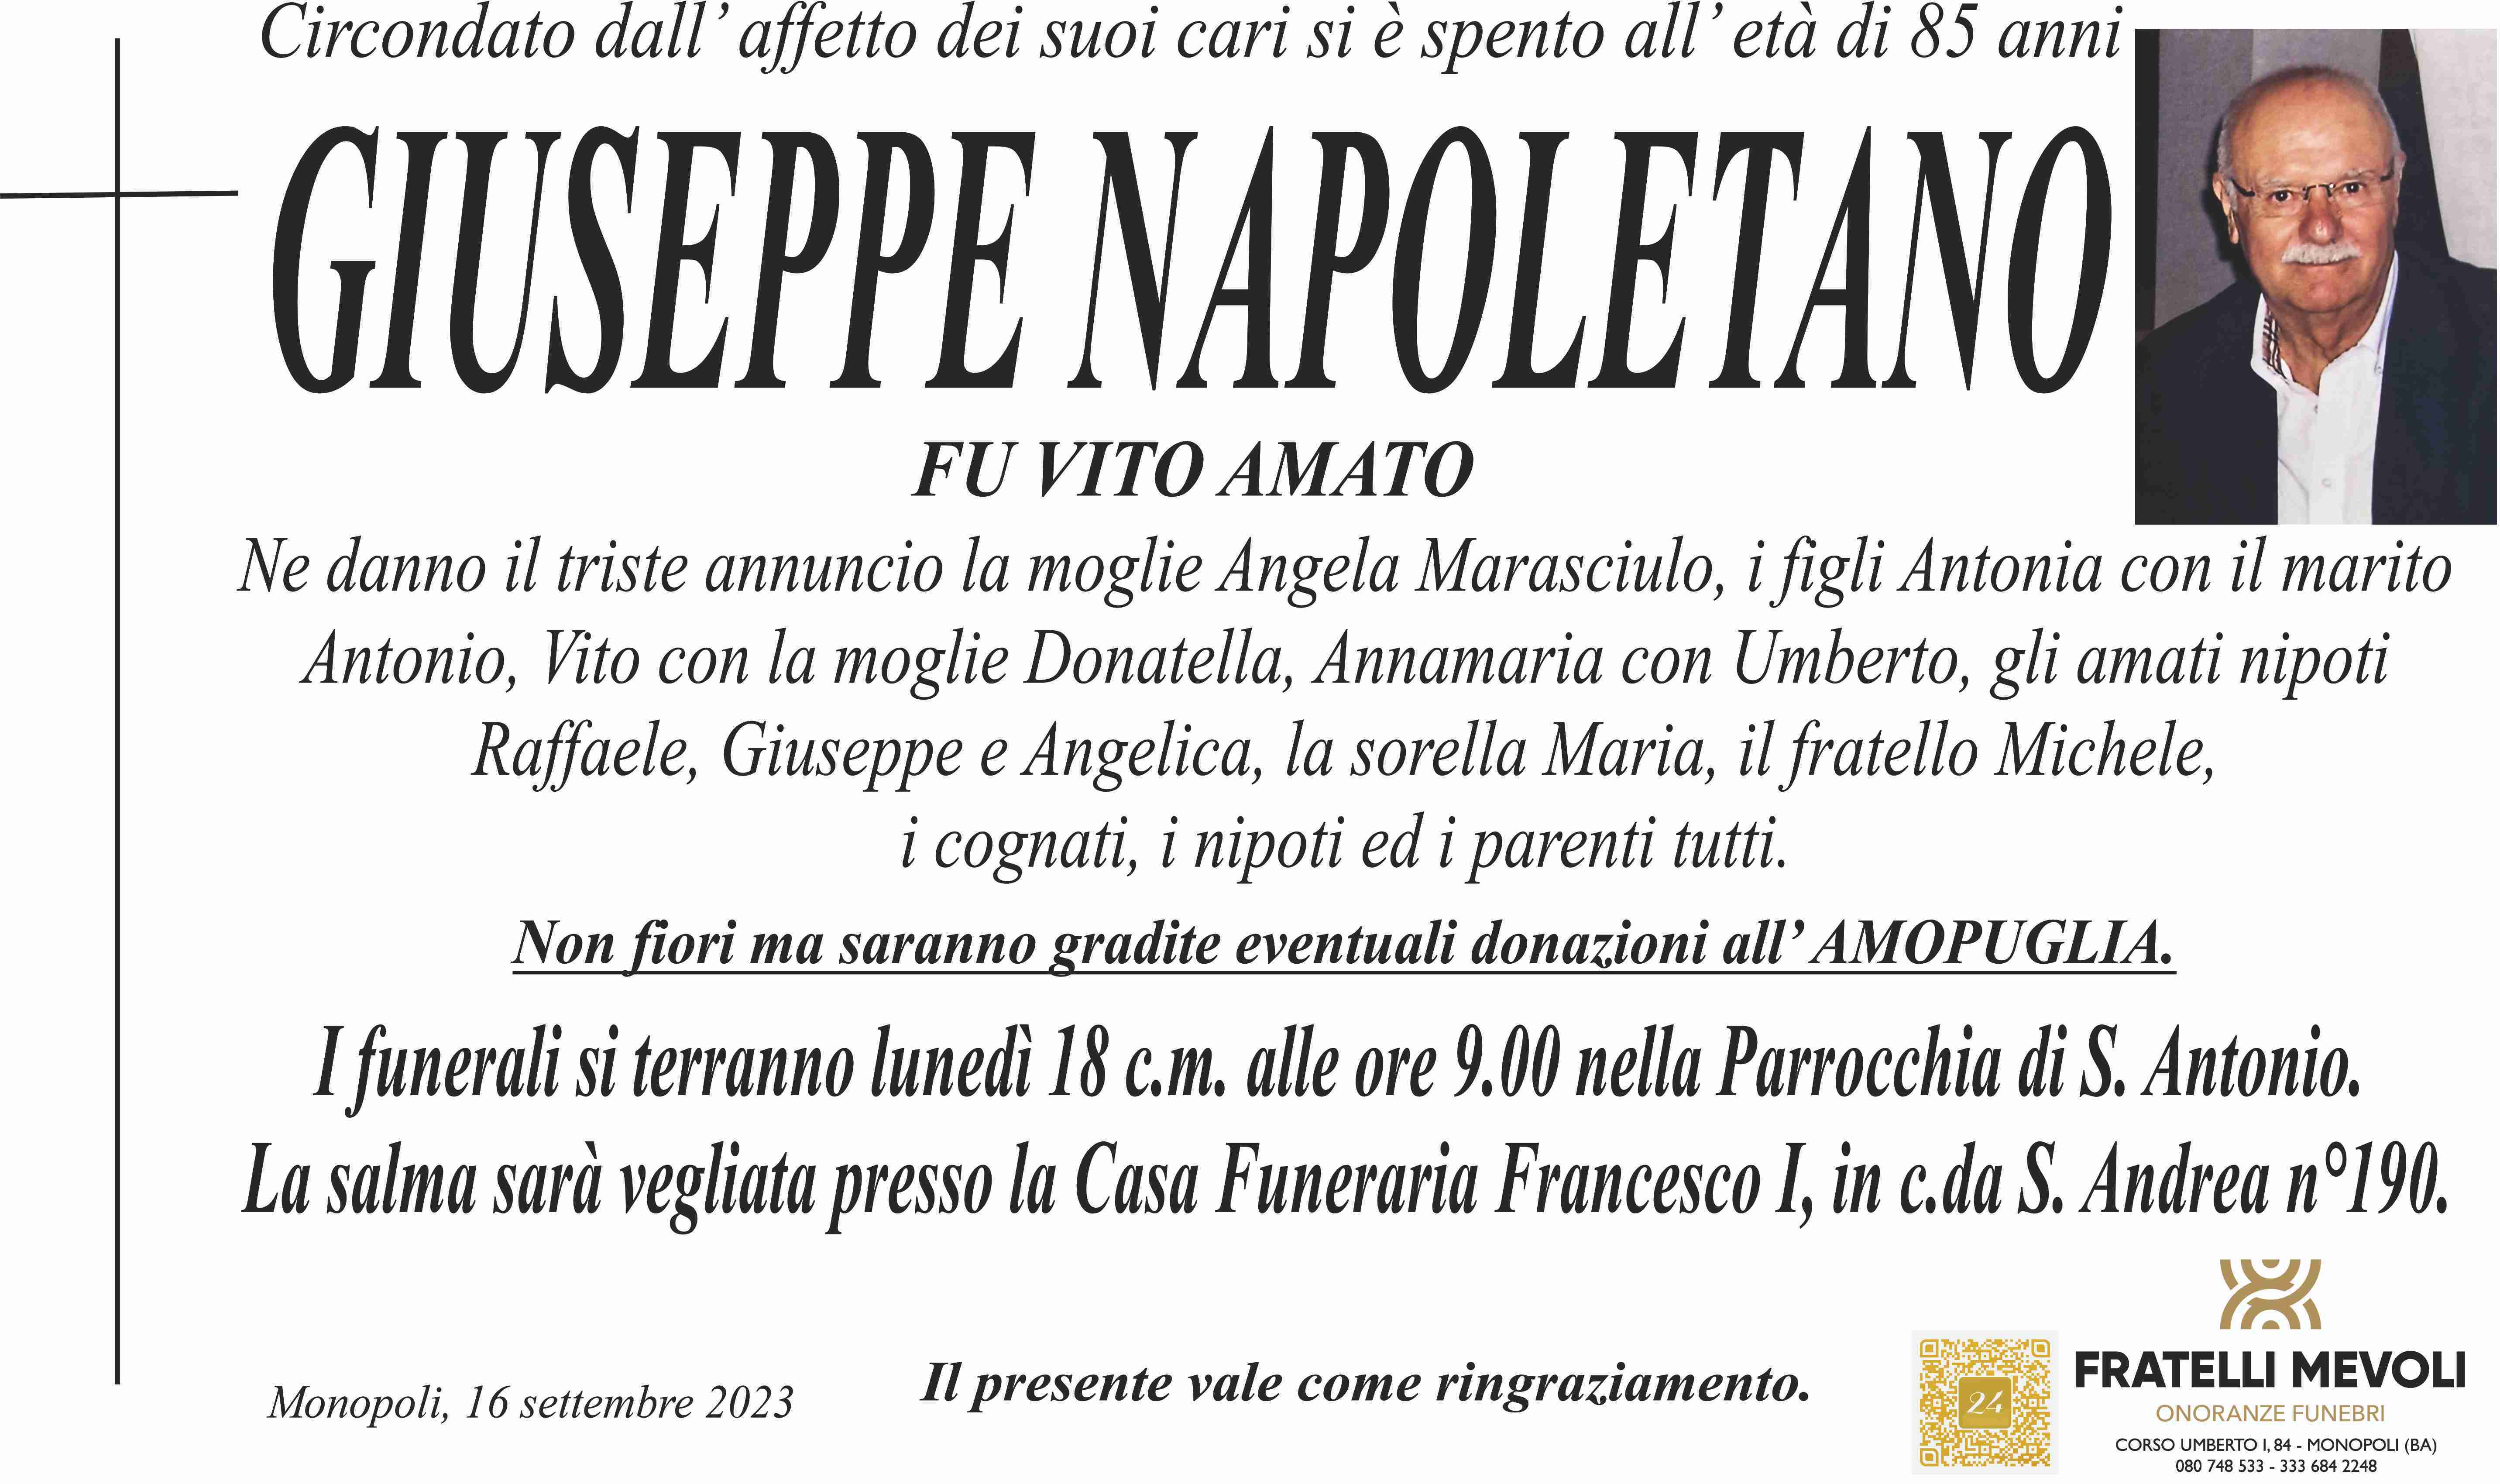 Giuseppe Napoletano